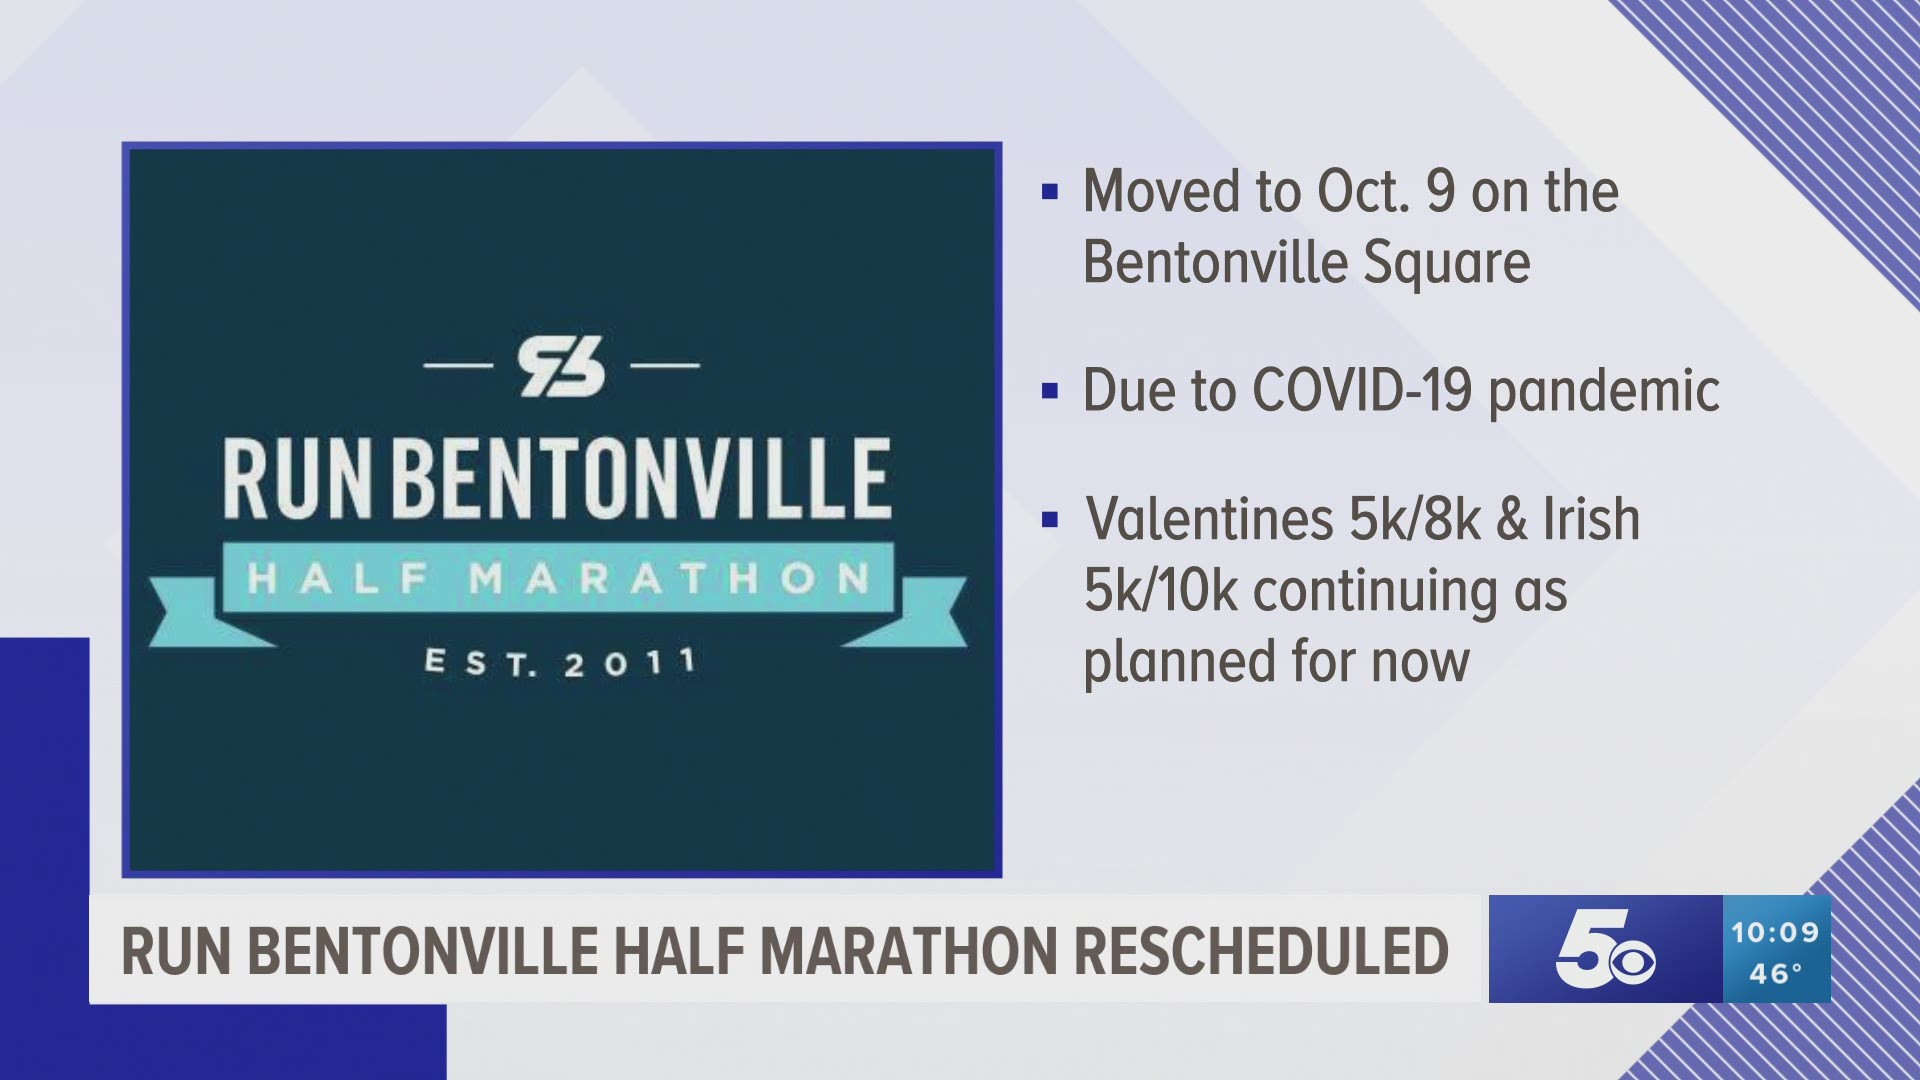 Run Bentonville Half Marathon rescheduled to October